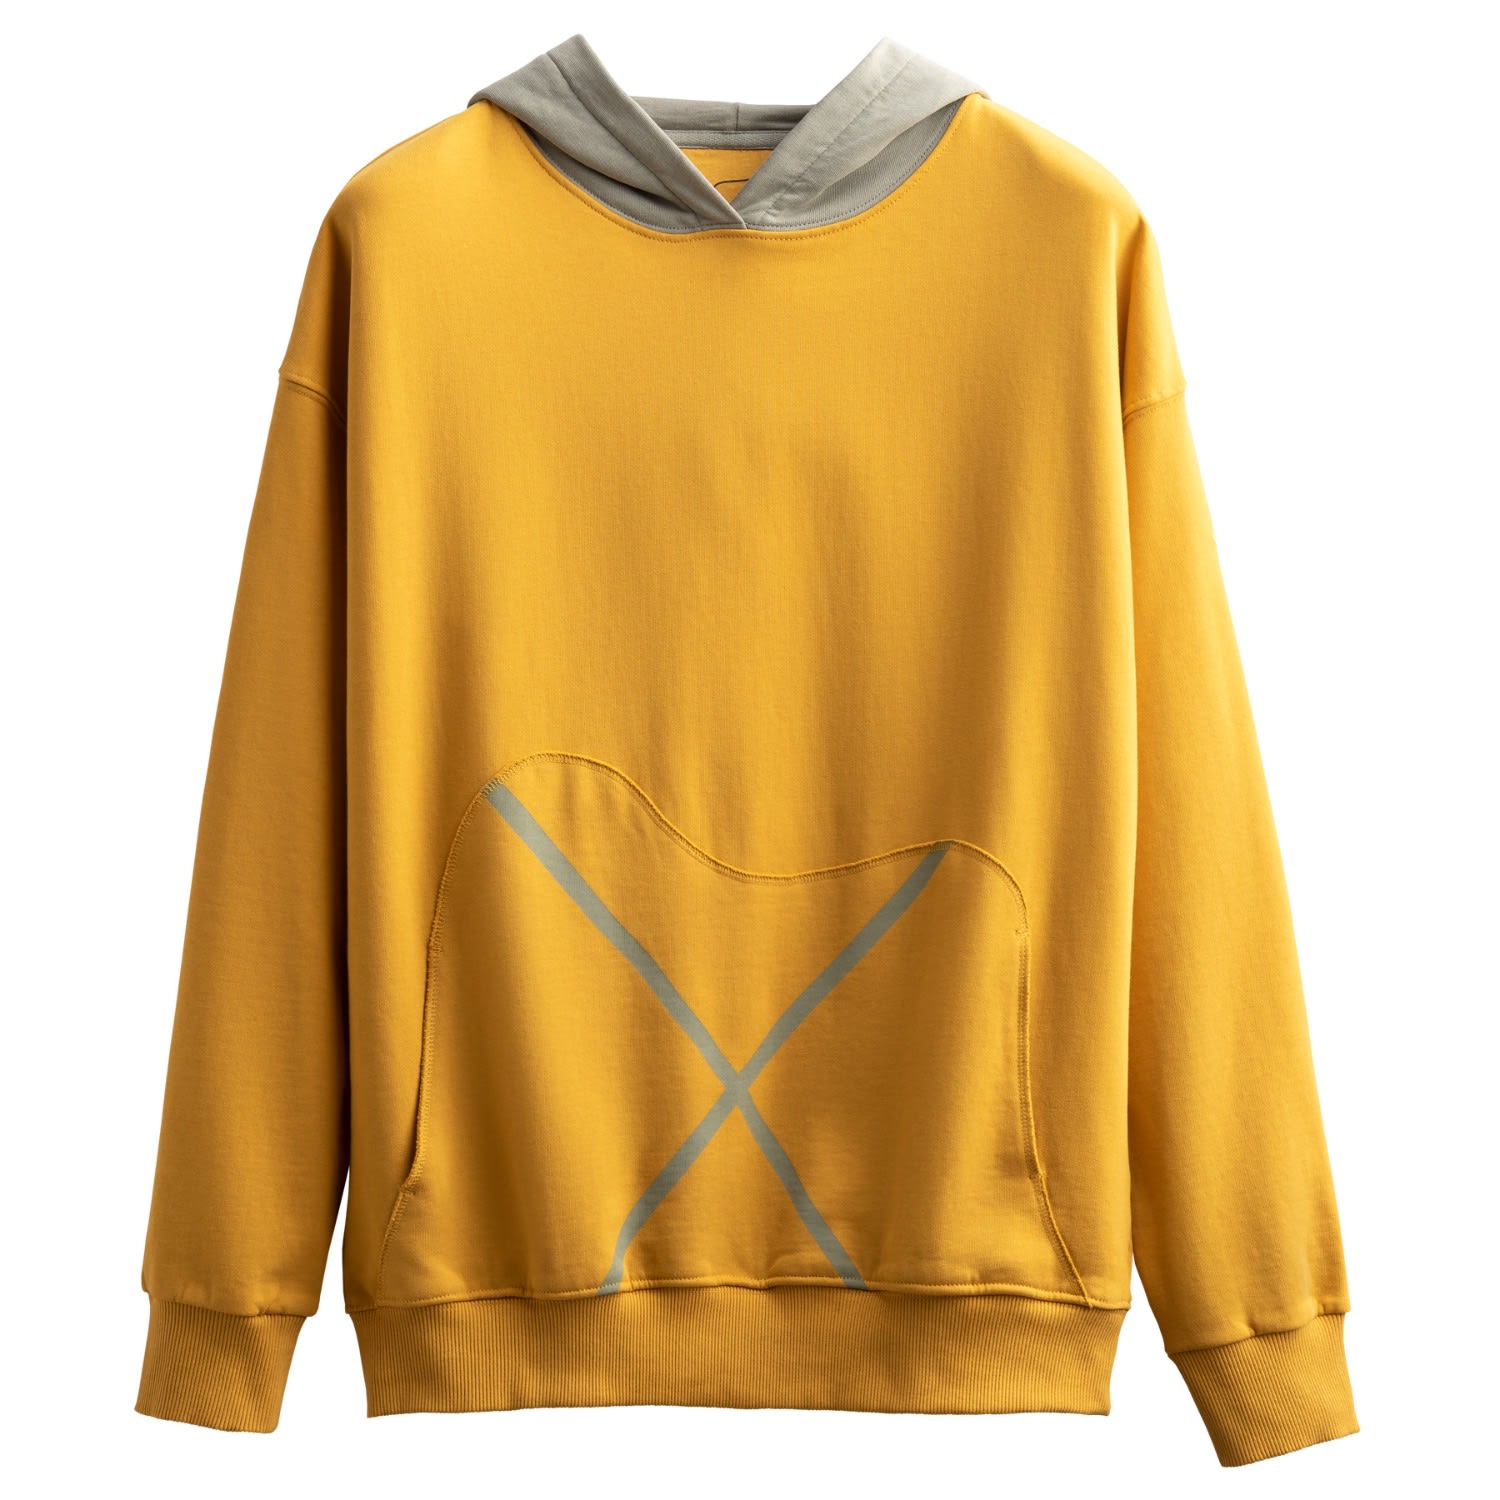 Men's Yellow / Orange Unisex Design Hoodie Sweatshirt - Xpocket - Sulphur Extra Small KAFT